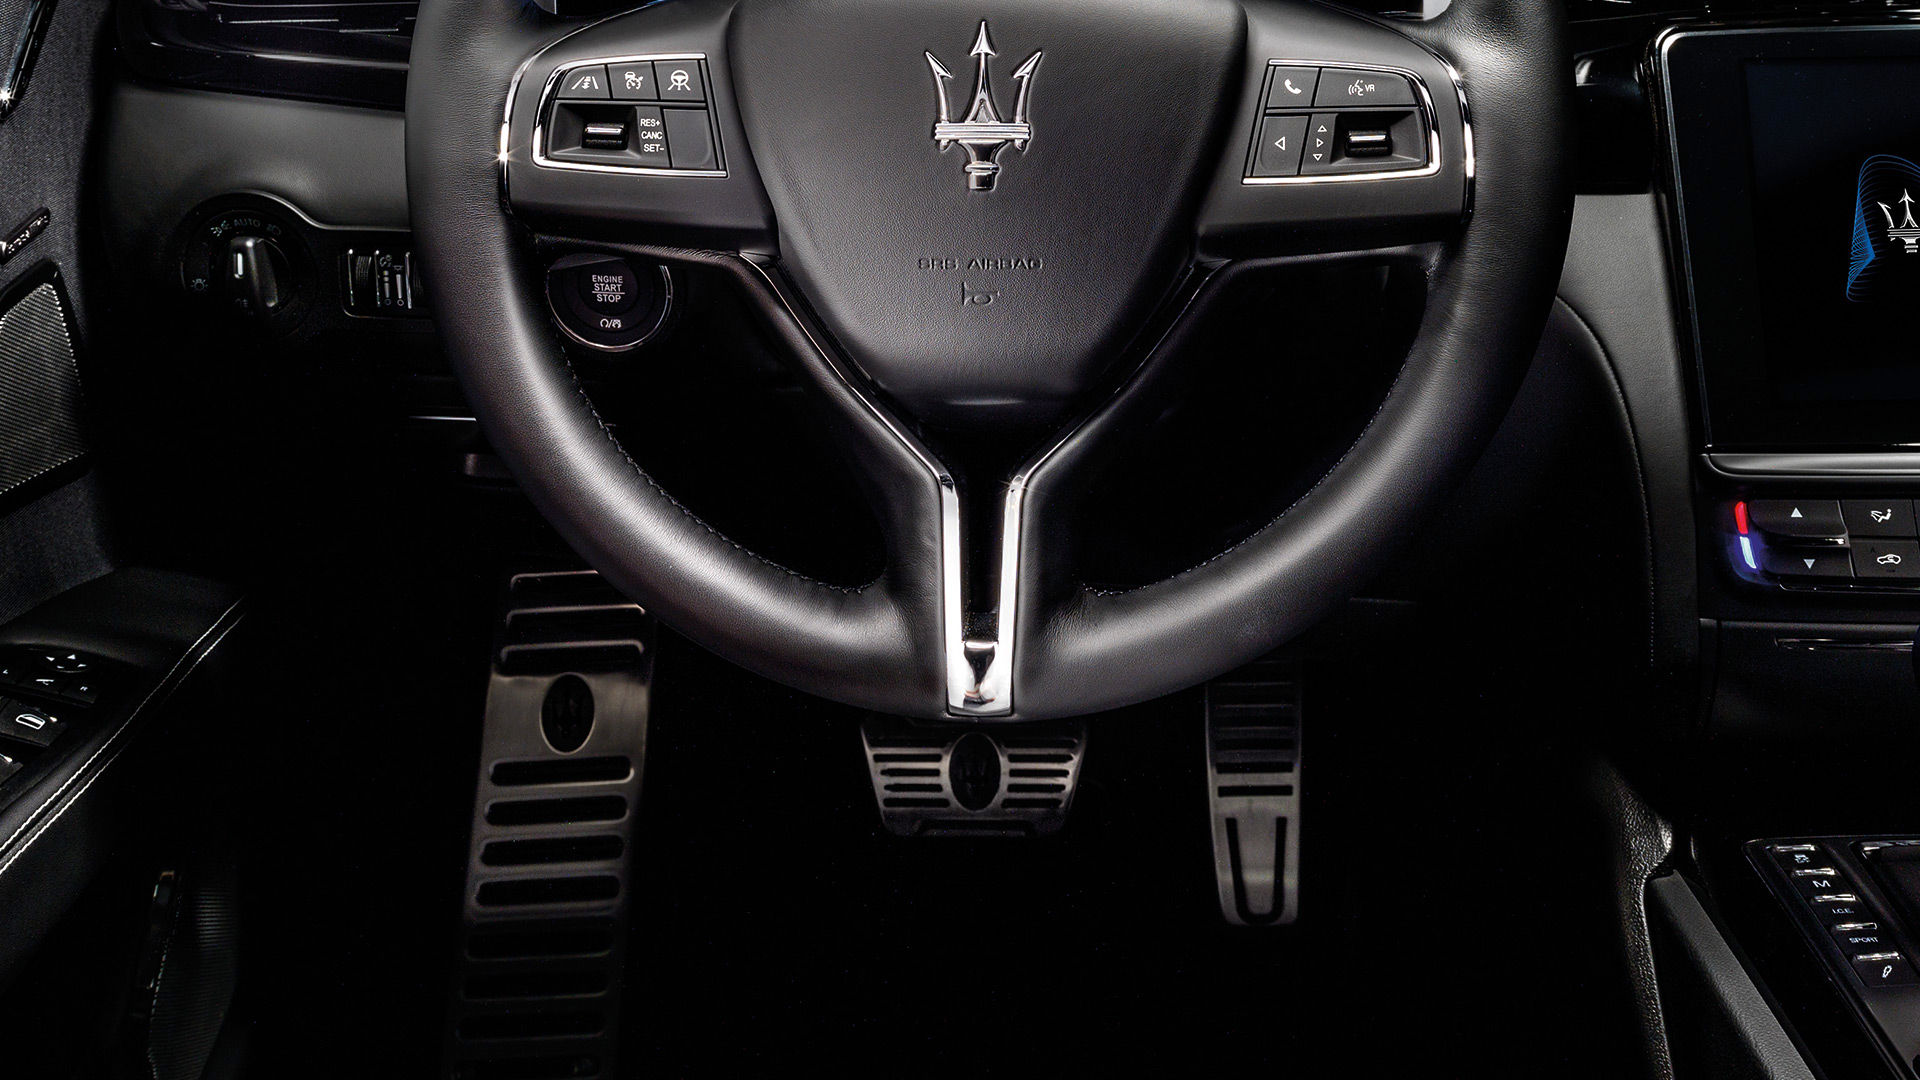 Maserati Quattroporte steering wheel and pedals